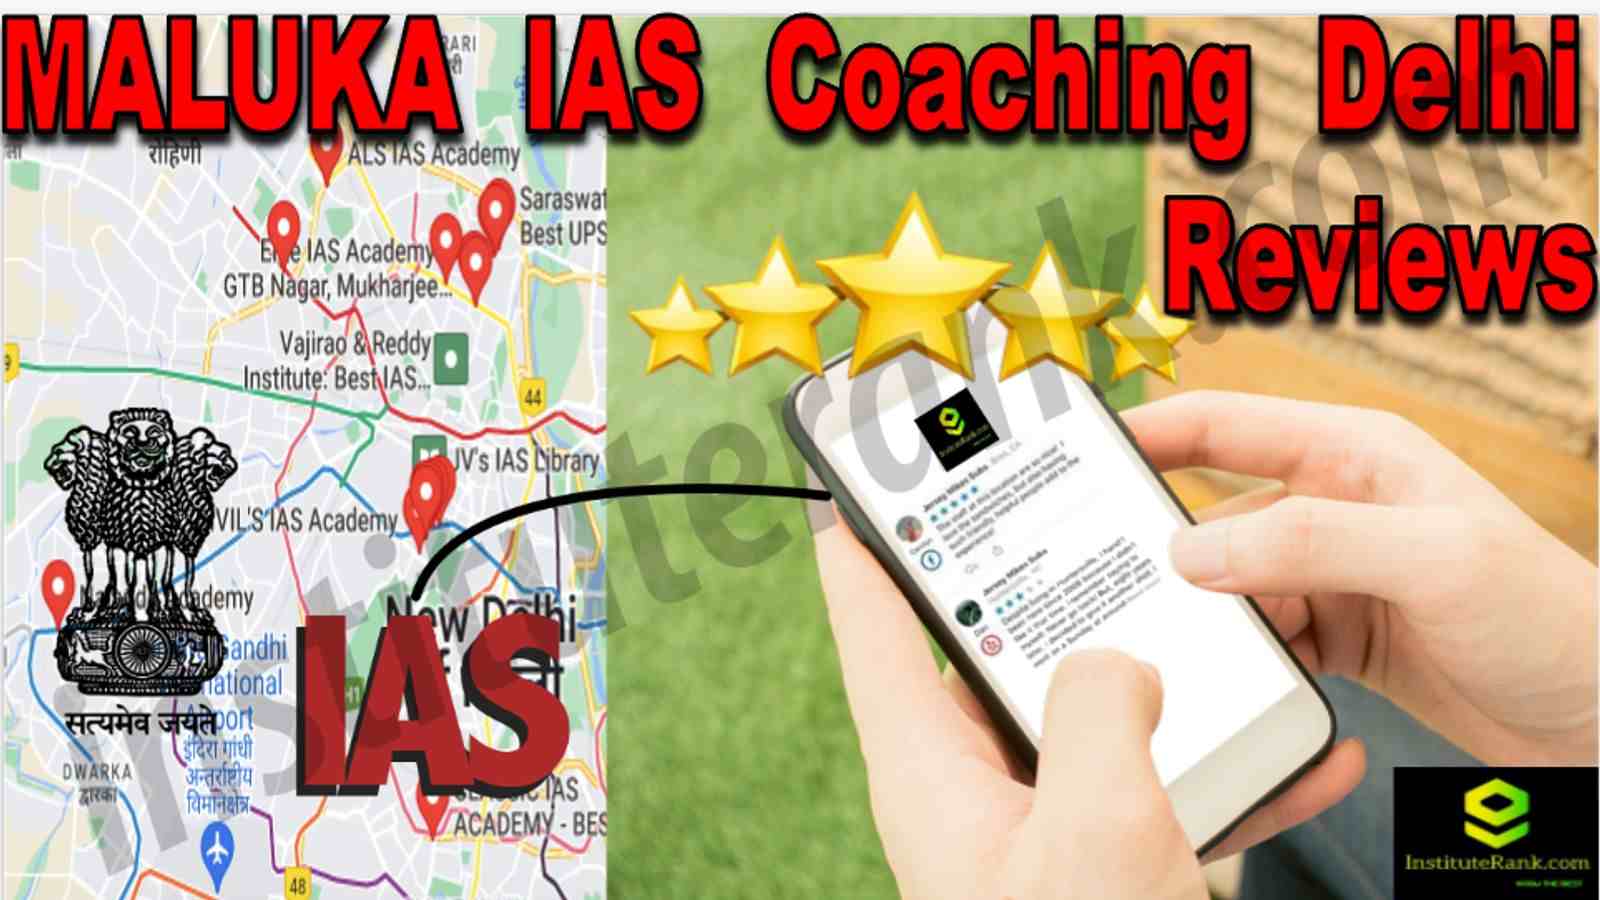 MALUKA IAS Coaching Delhi Reviews